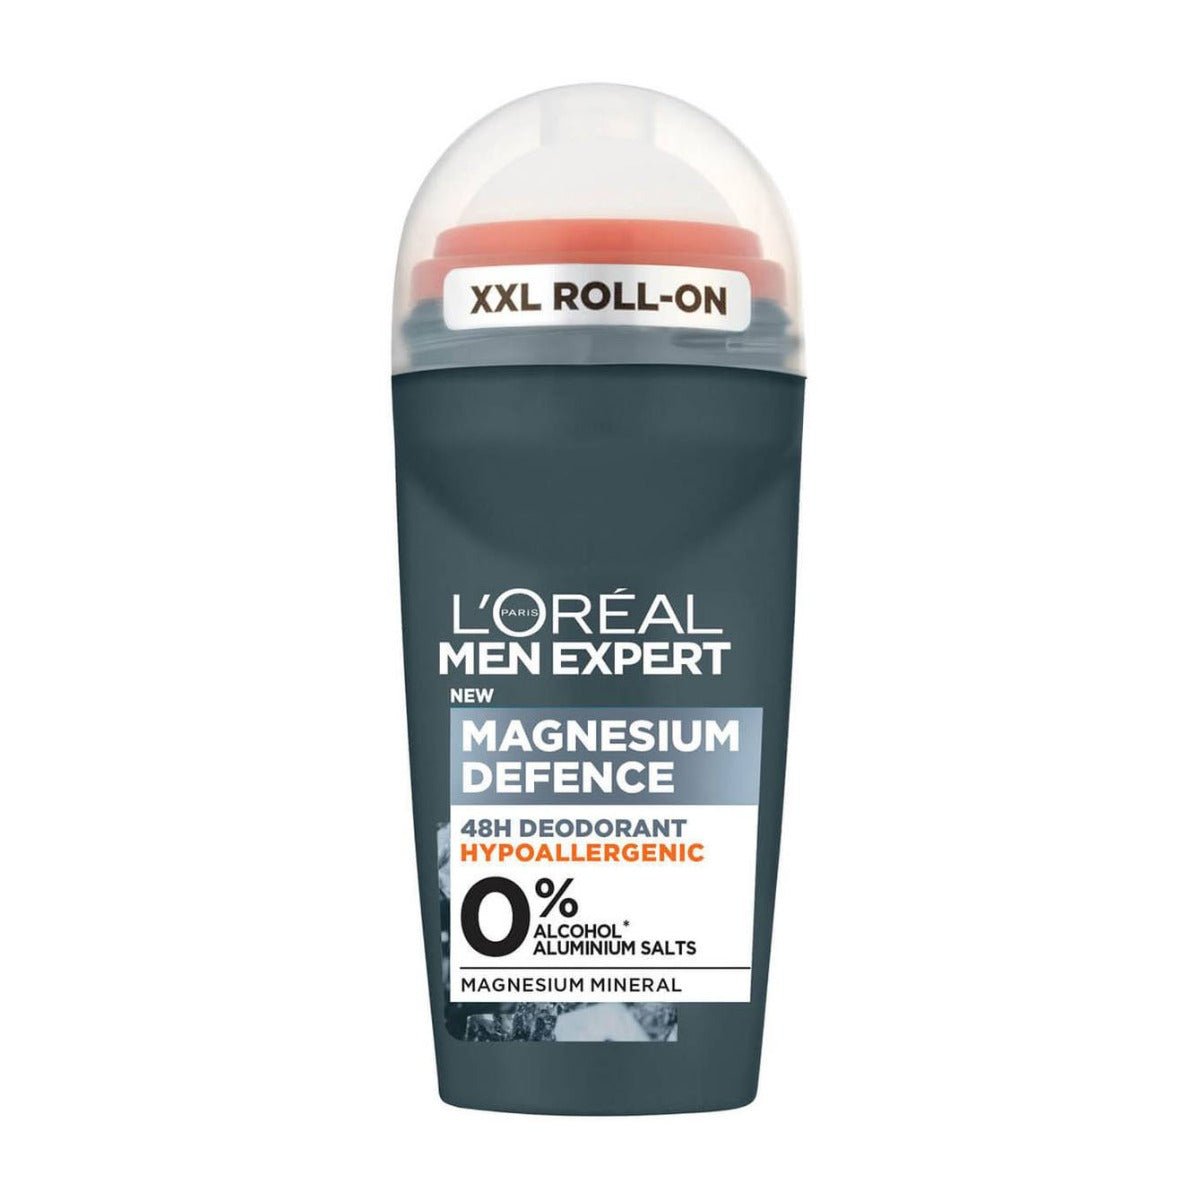 L'Oreal Men Expert Magnesium Defence Hypoallergenic 48H Deodorant Roll-On - 50ml - Bloom Pharmacy